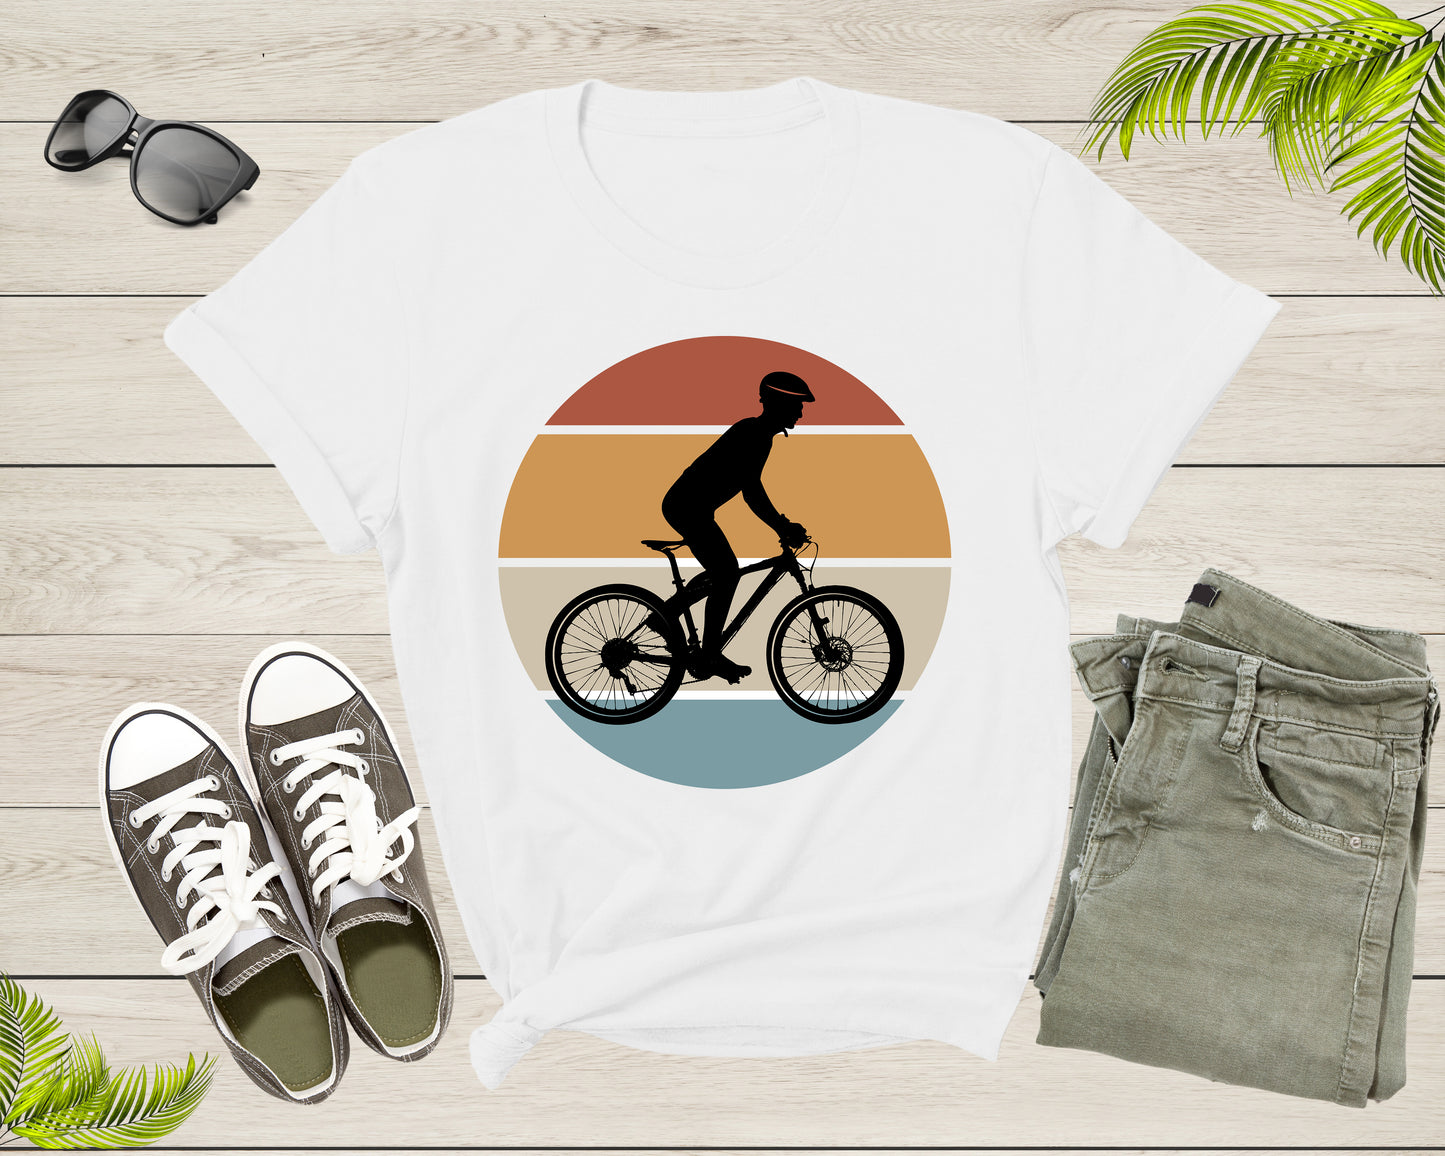 Retro Bicycle Lover Gift Idea Shirt Women Men Kids Boys Girls Bicycle Themed Tshirt Design Bike Lover Birthday Present Dad Mom T-shirt